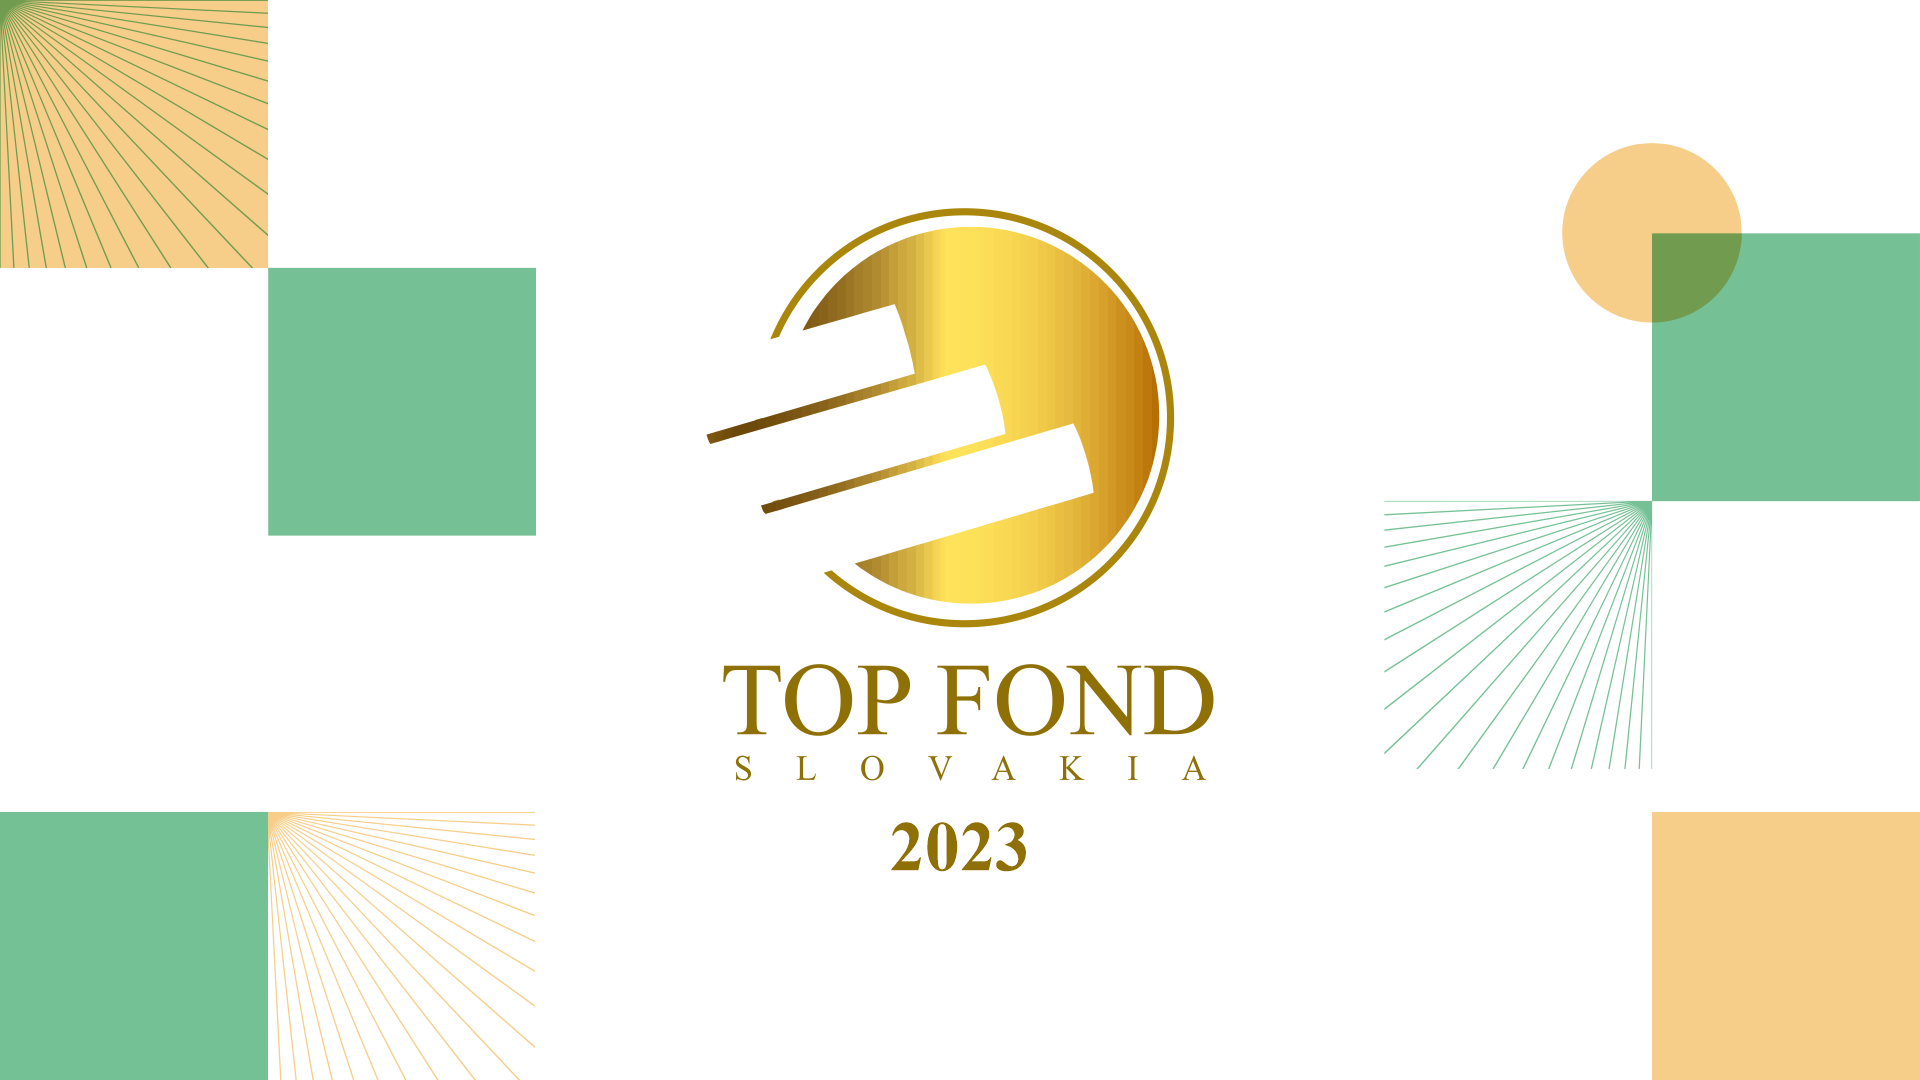 Top fond 2023